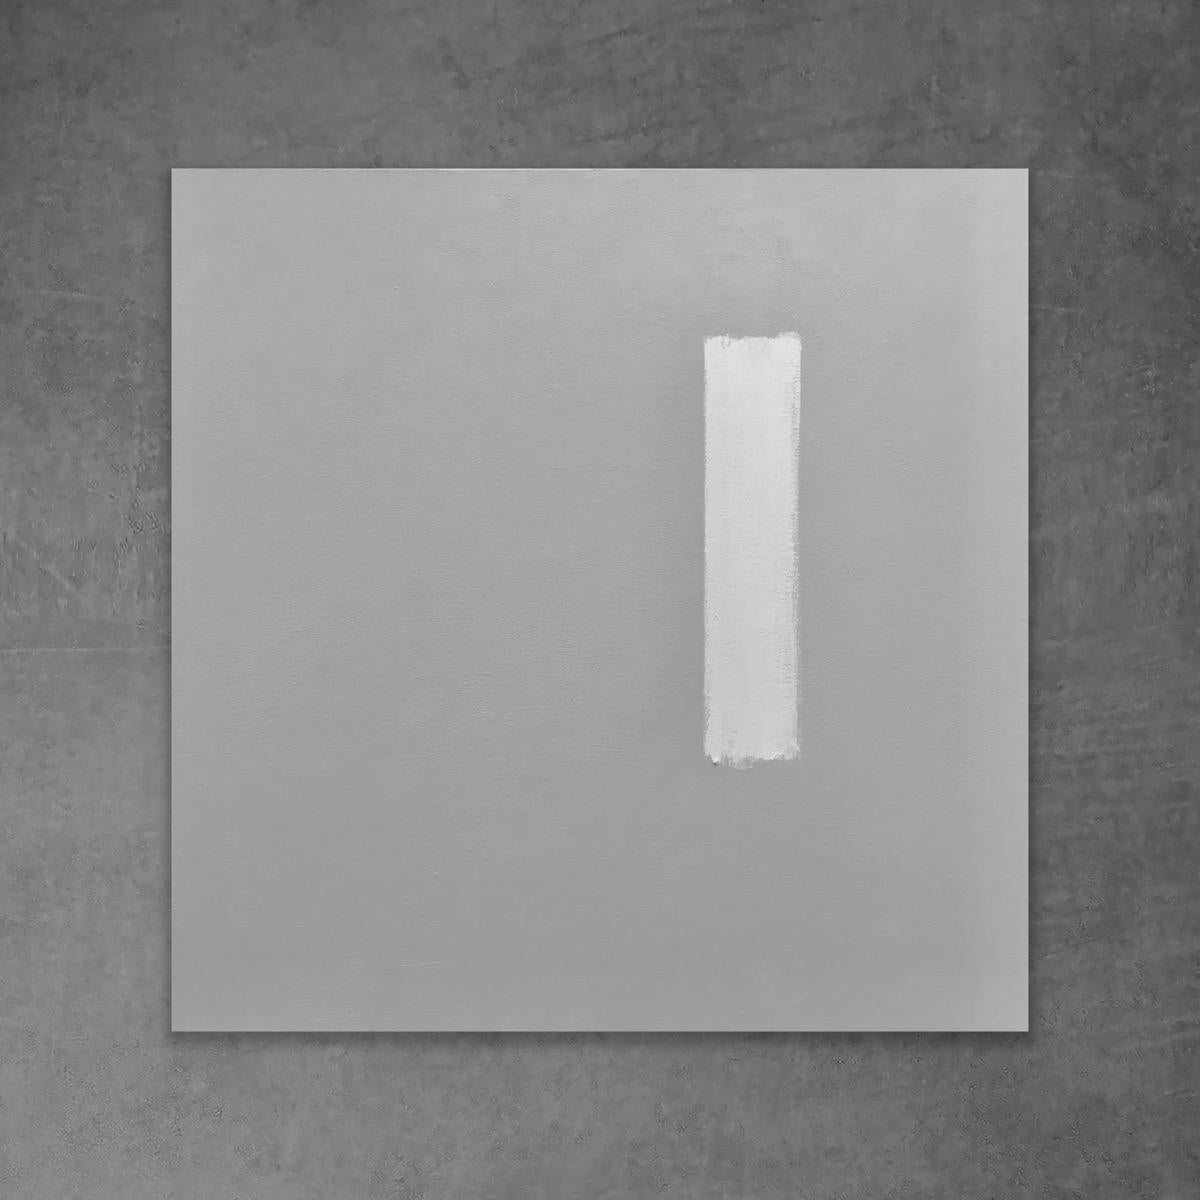 Finish Line - 20"x20", Grey, White, Modern, Minimal Abstract Painting - Art by Andrea Stajan-Ferkul